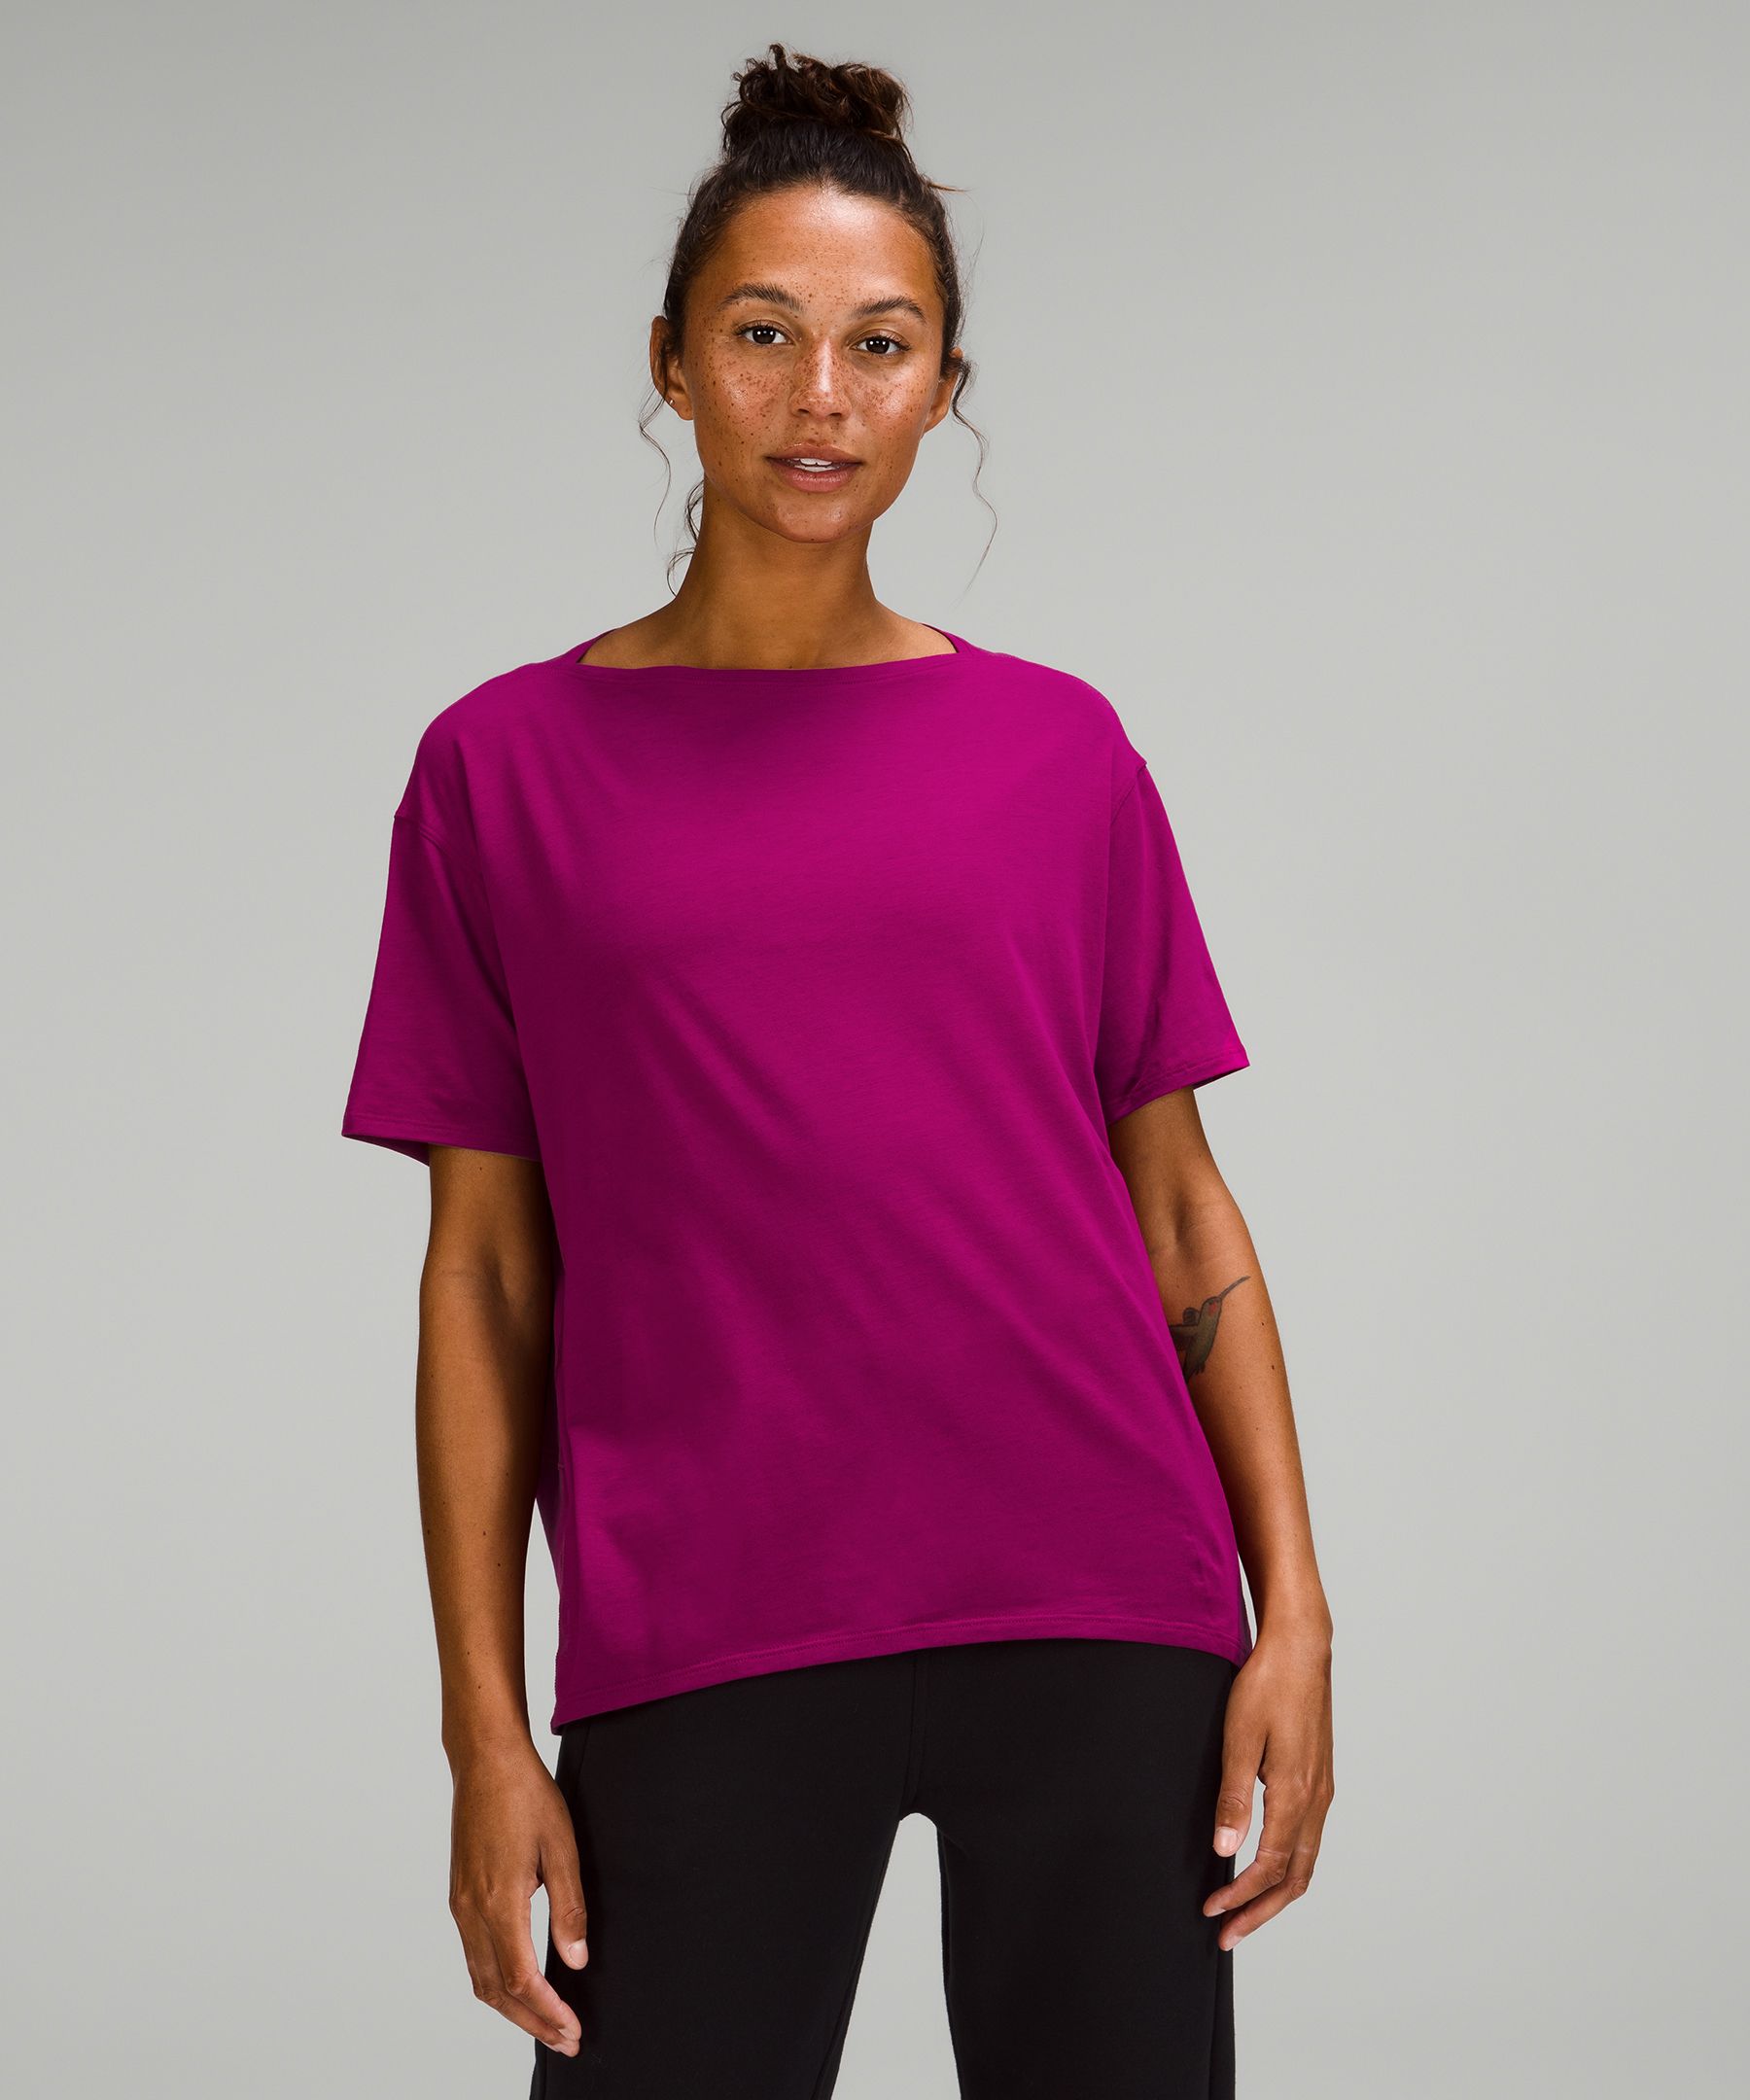 Back in Action Short Sleeve Shirt *Online Only | Women's Short 